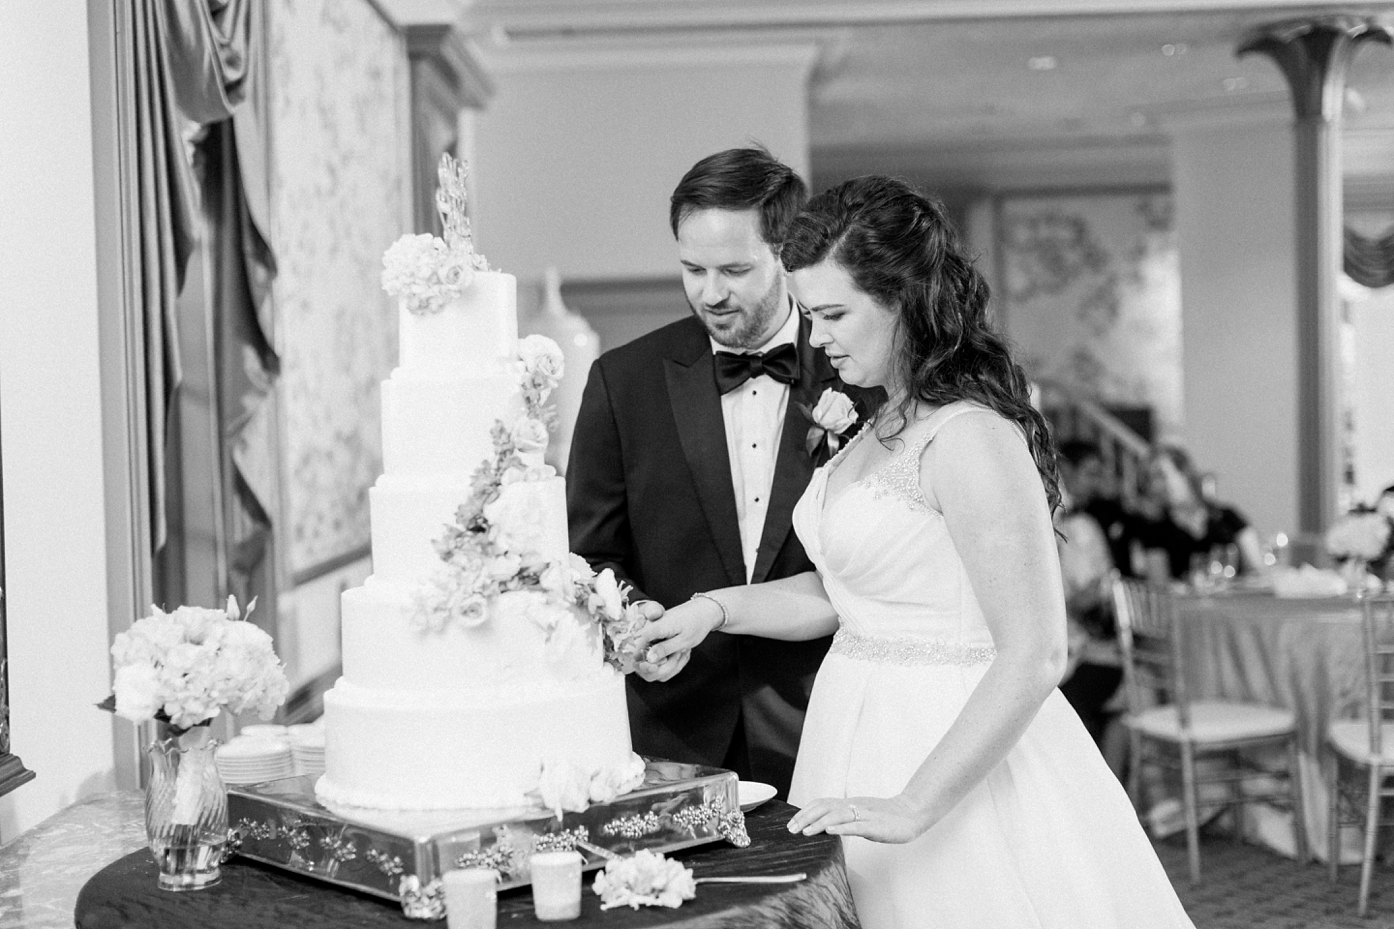 Williamsburg Inn Wedding by Alisandra Photography